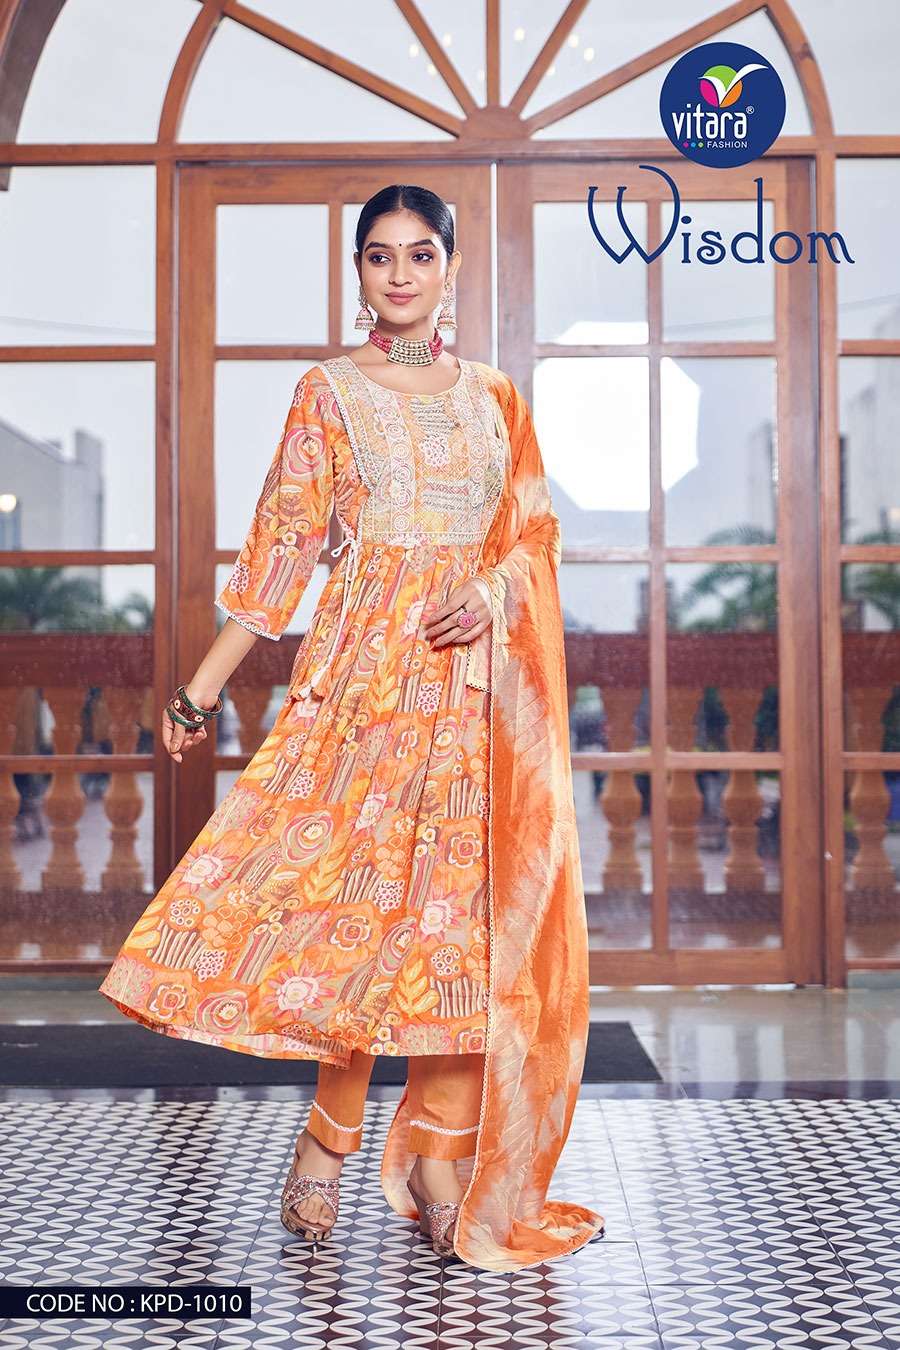 vitara fashion wisdom rayon gorgeous look top bottom with dupatta catalog